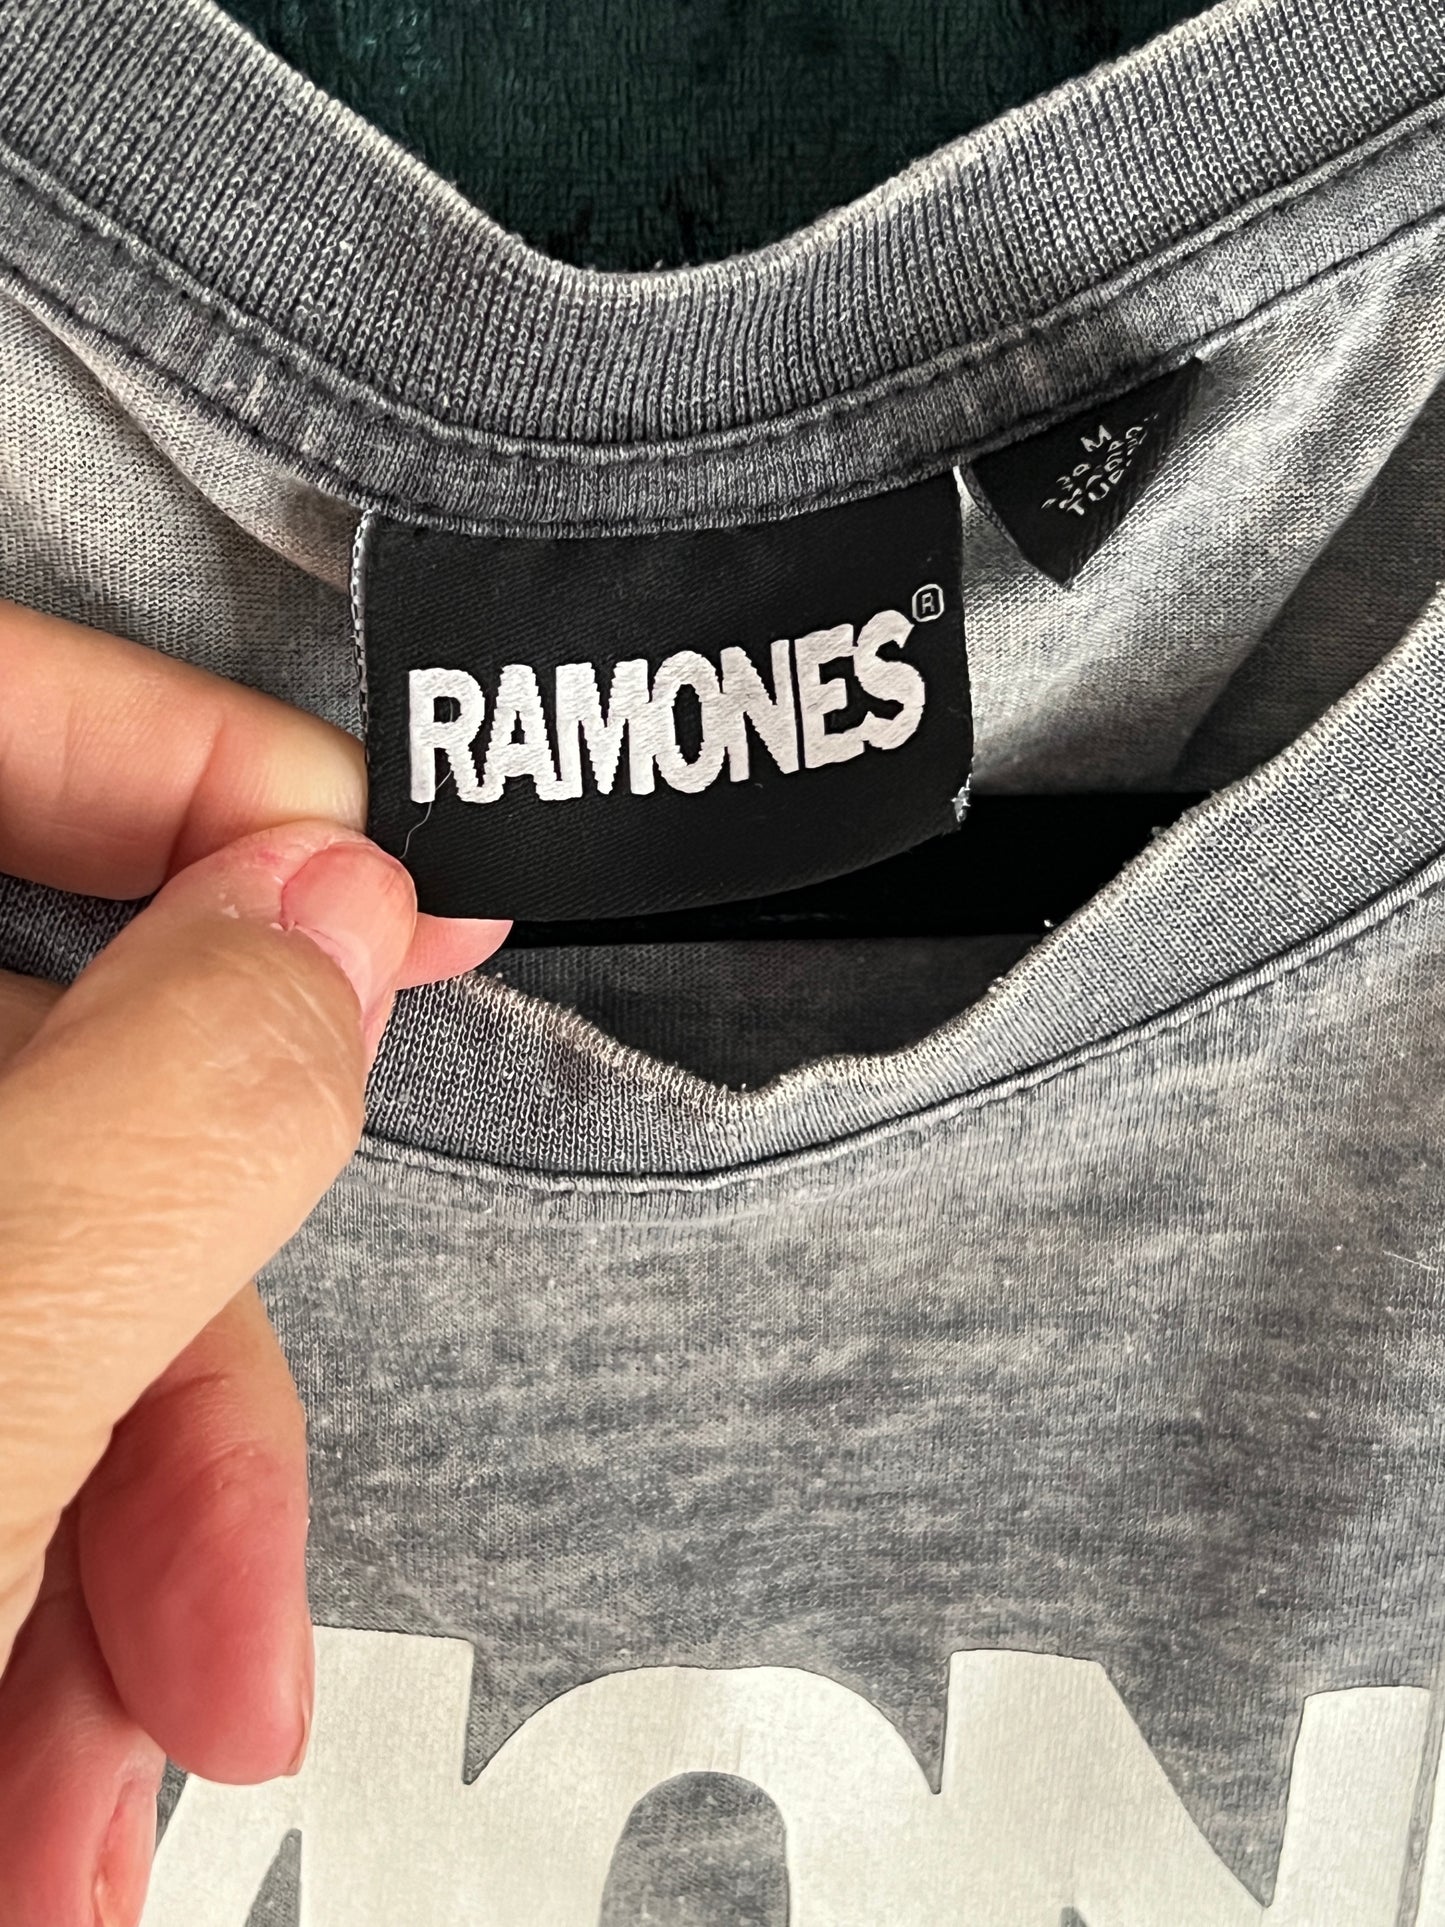 Retro Ramones punk rock band t grey mottled t shirt